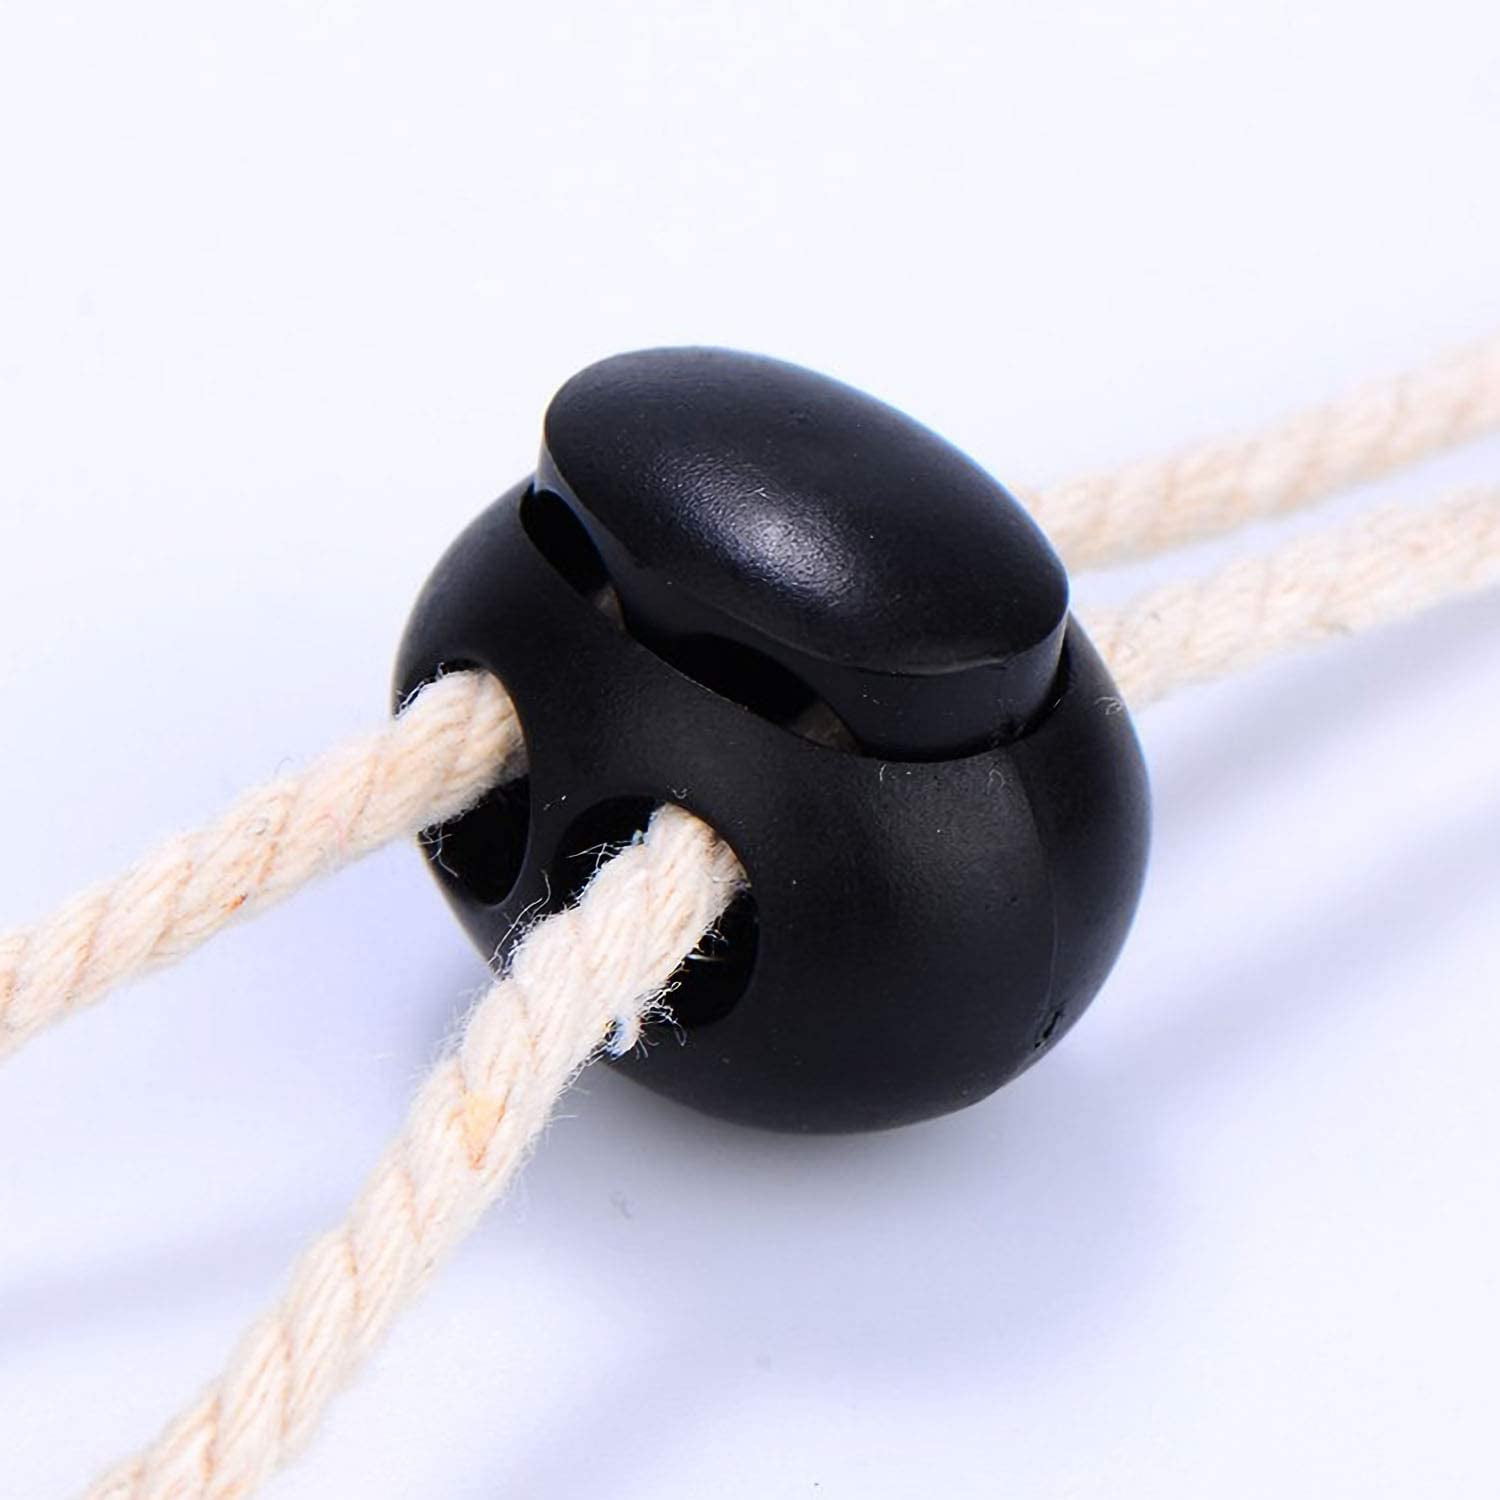 Shapenty 50PCS Round Ball Shape Black Plastic Toggle Single Hole Spring Loaded Elastic Drawstring Rope Cord Locks Clip Ends Bulk Luggage Lanyard Stopper Sliding Fastener Buttons, Small 